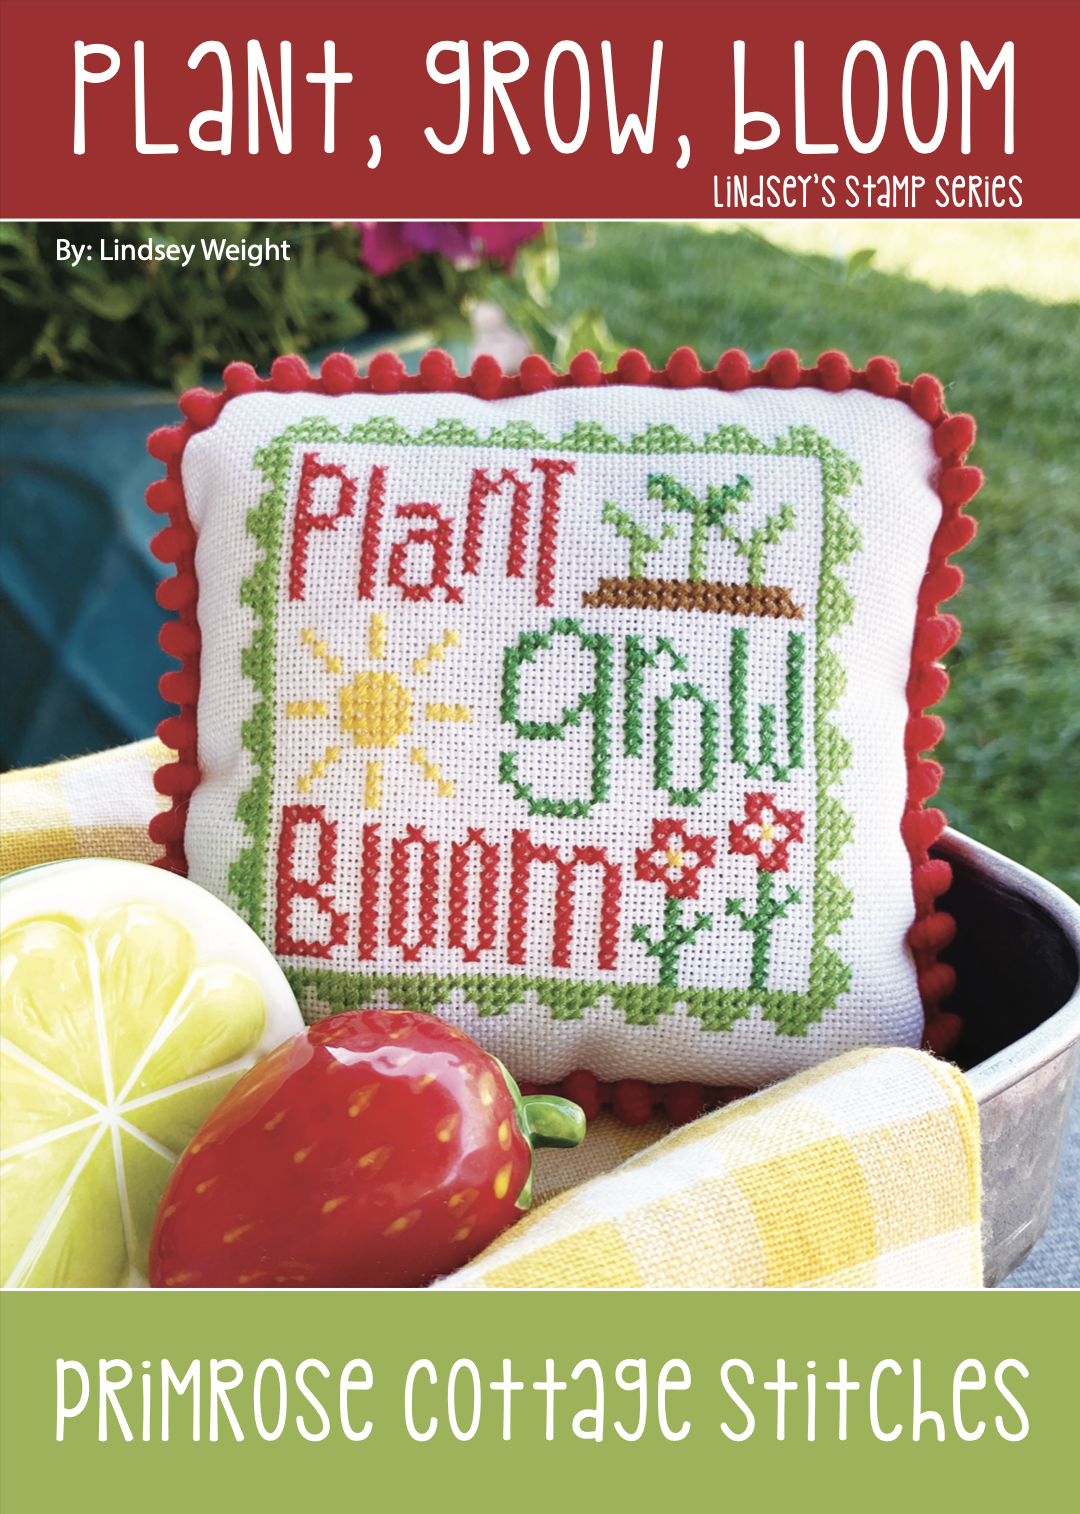 Plant, Grow, Bloom - Stamp Series | Primrose Cottage Stitches